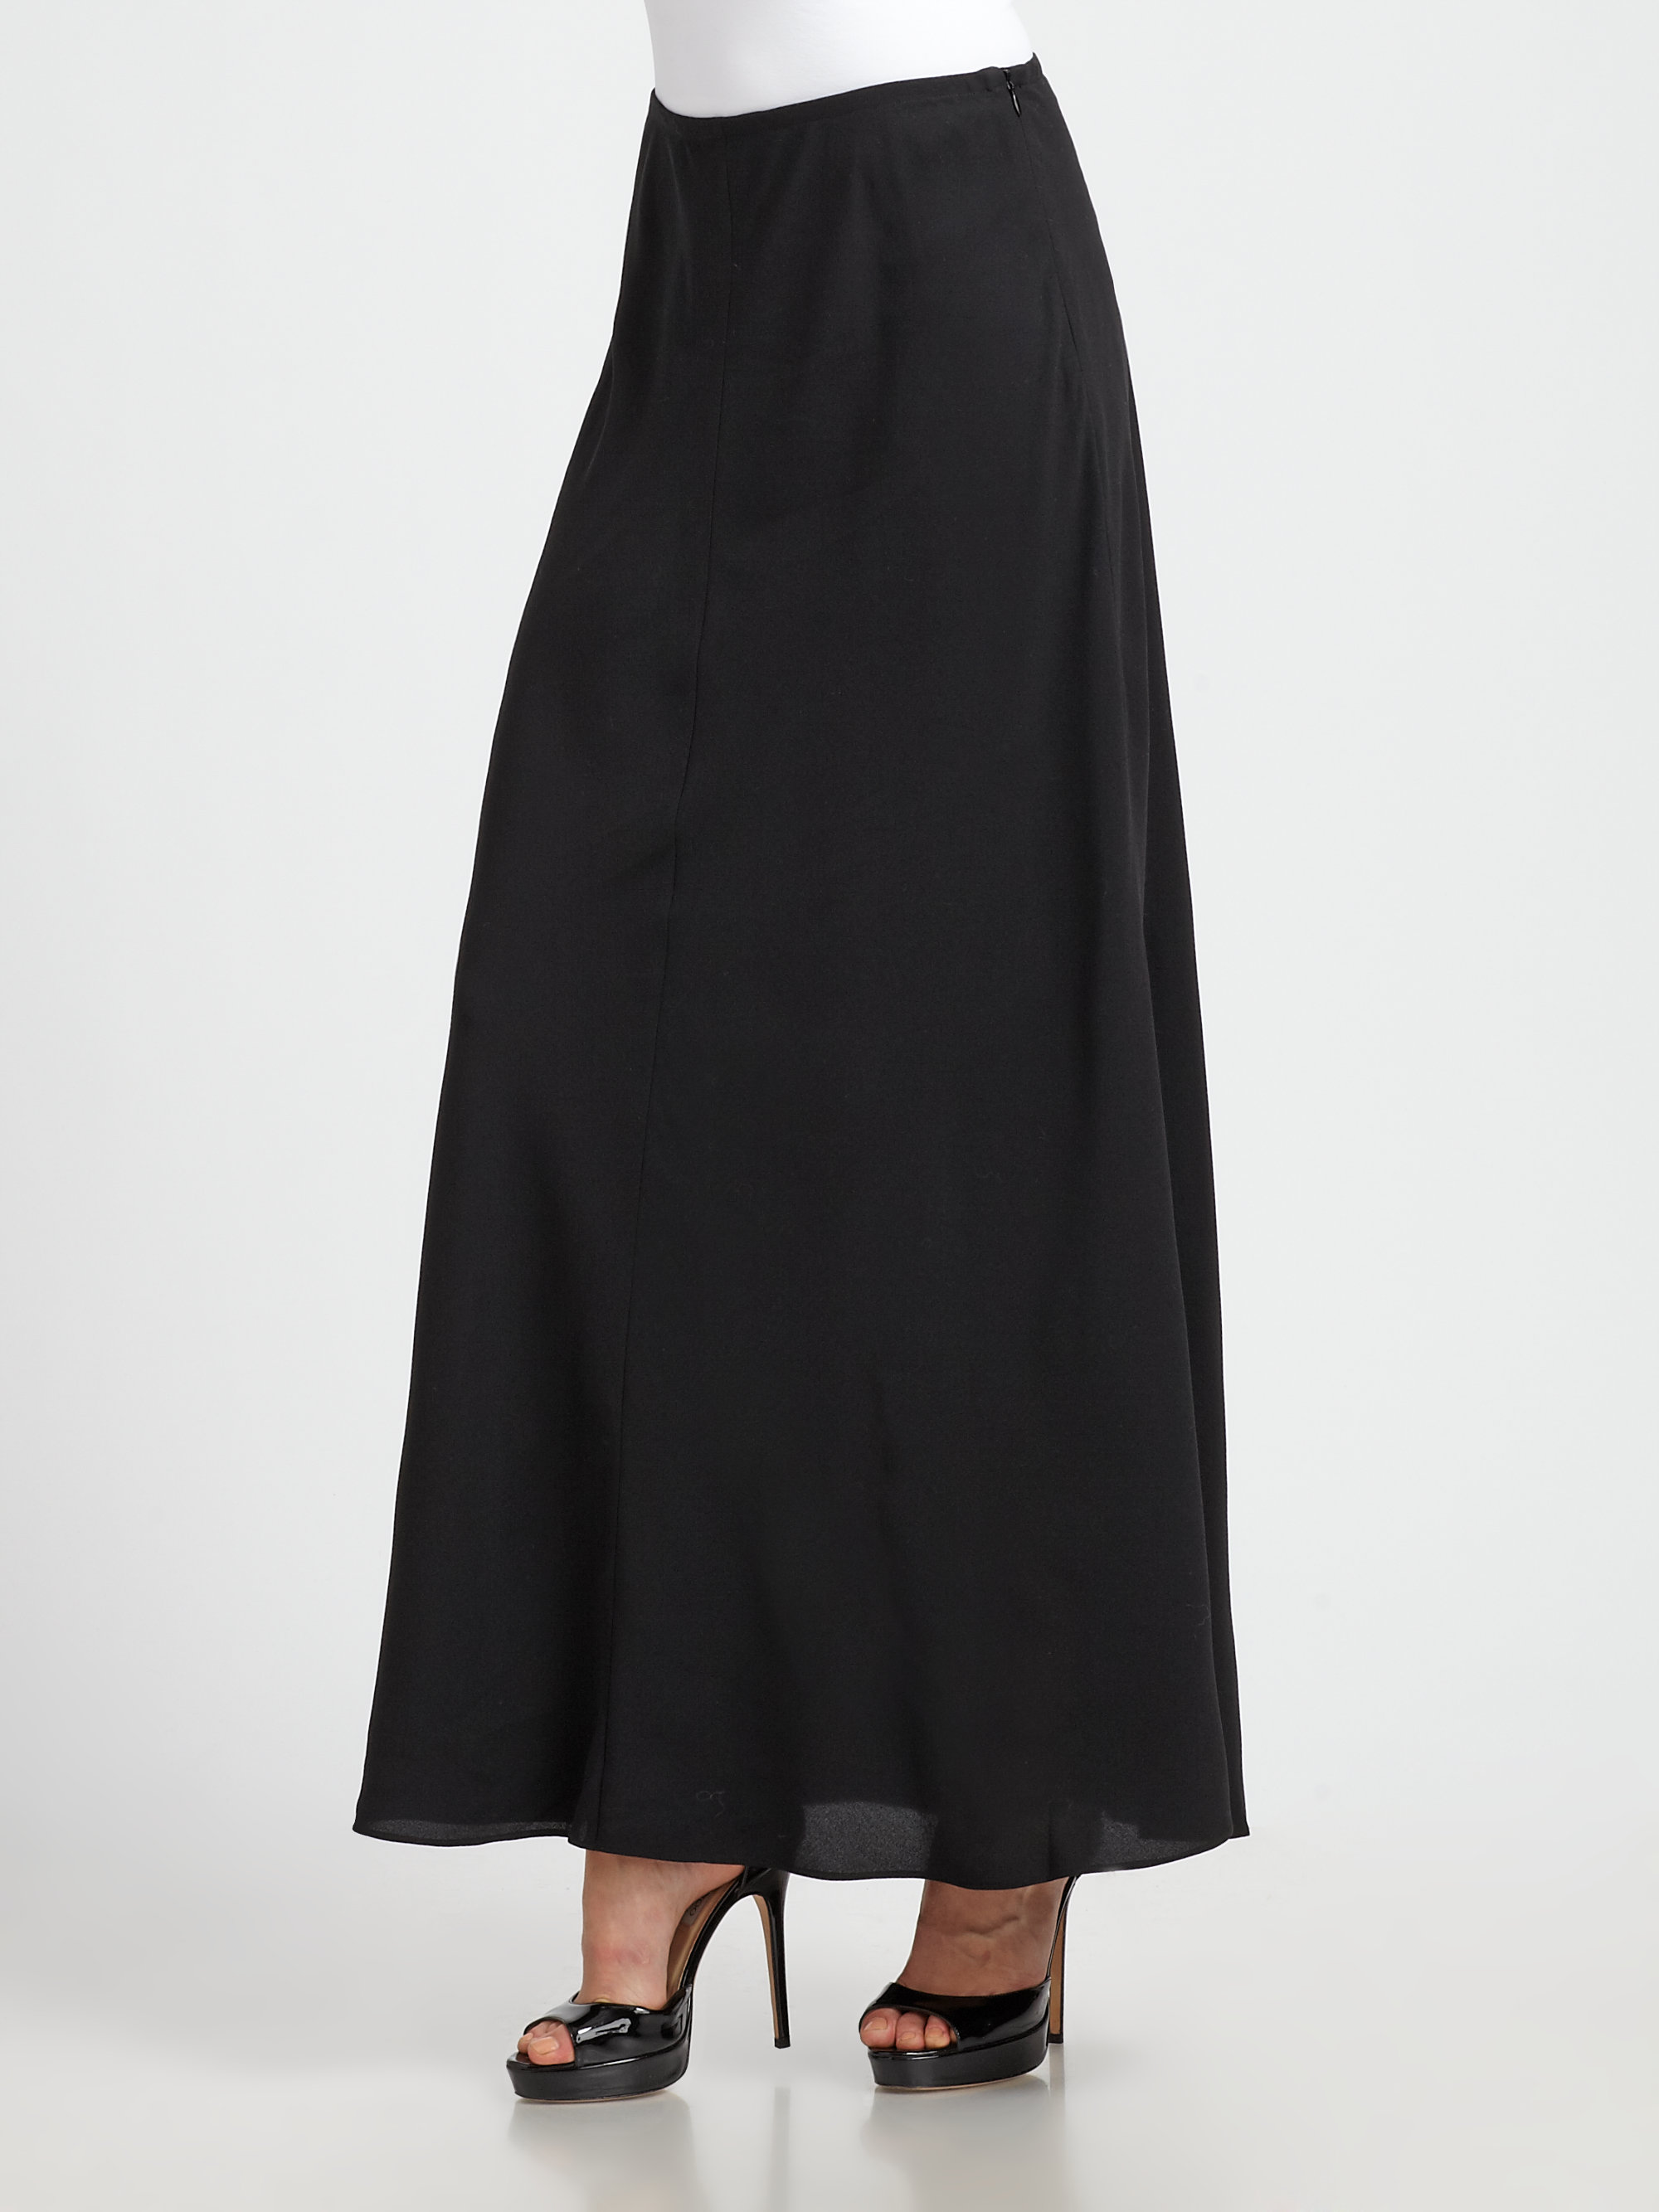 Eileen Fisher Silk Georgette Skirt in Black - Lyst